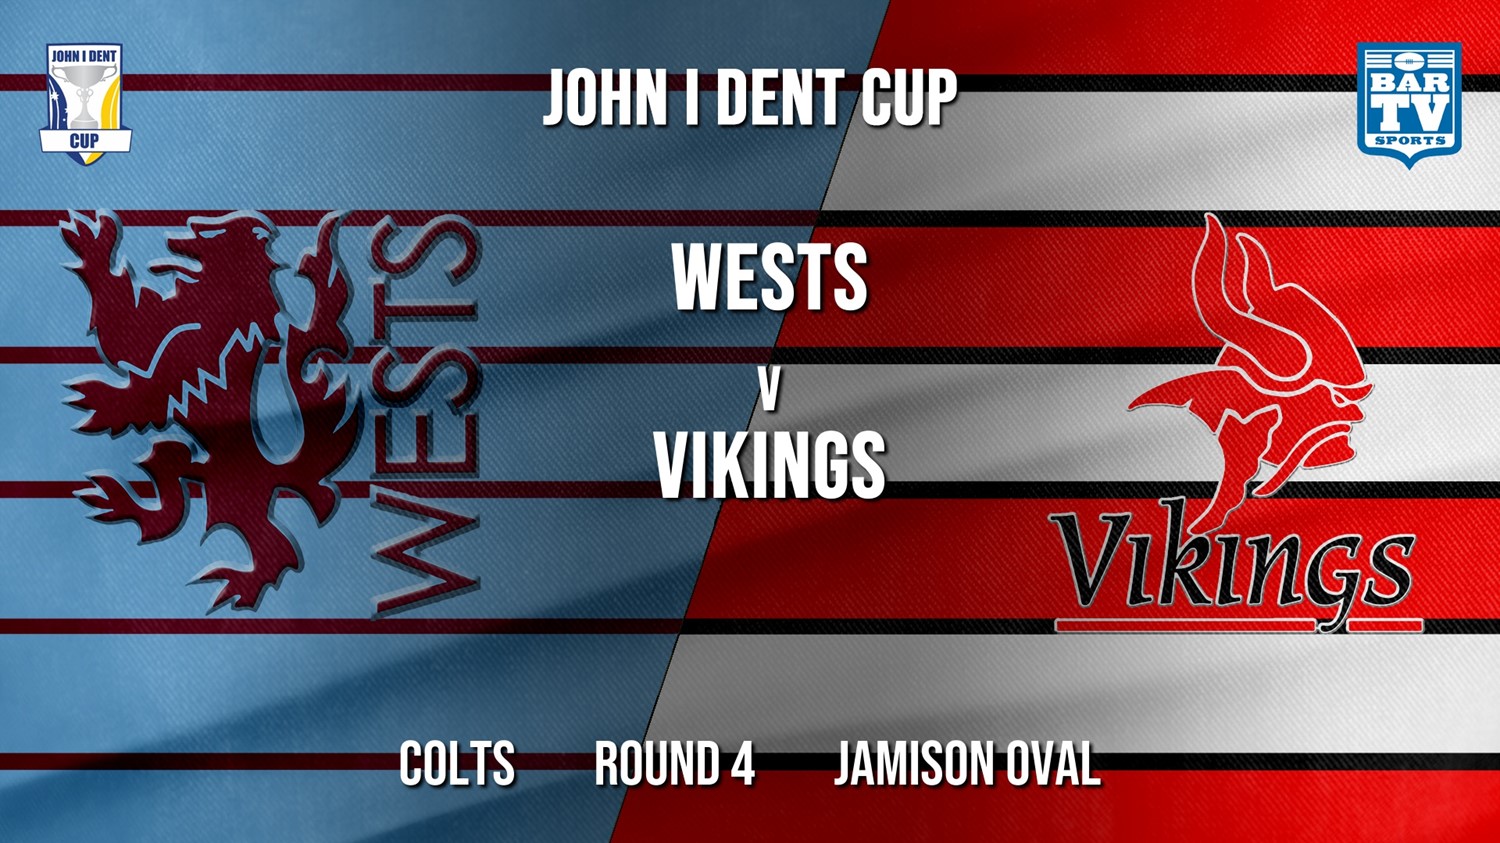 John I Dent Round 4 - Colts - Wests Lions v Tuggeranong Vikings Minigame Slate Image